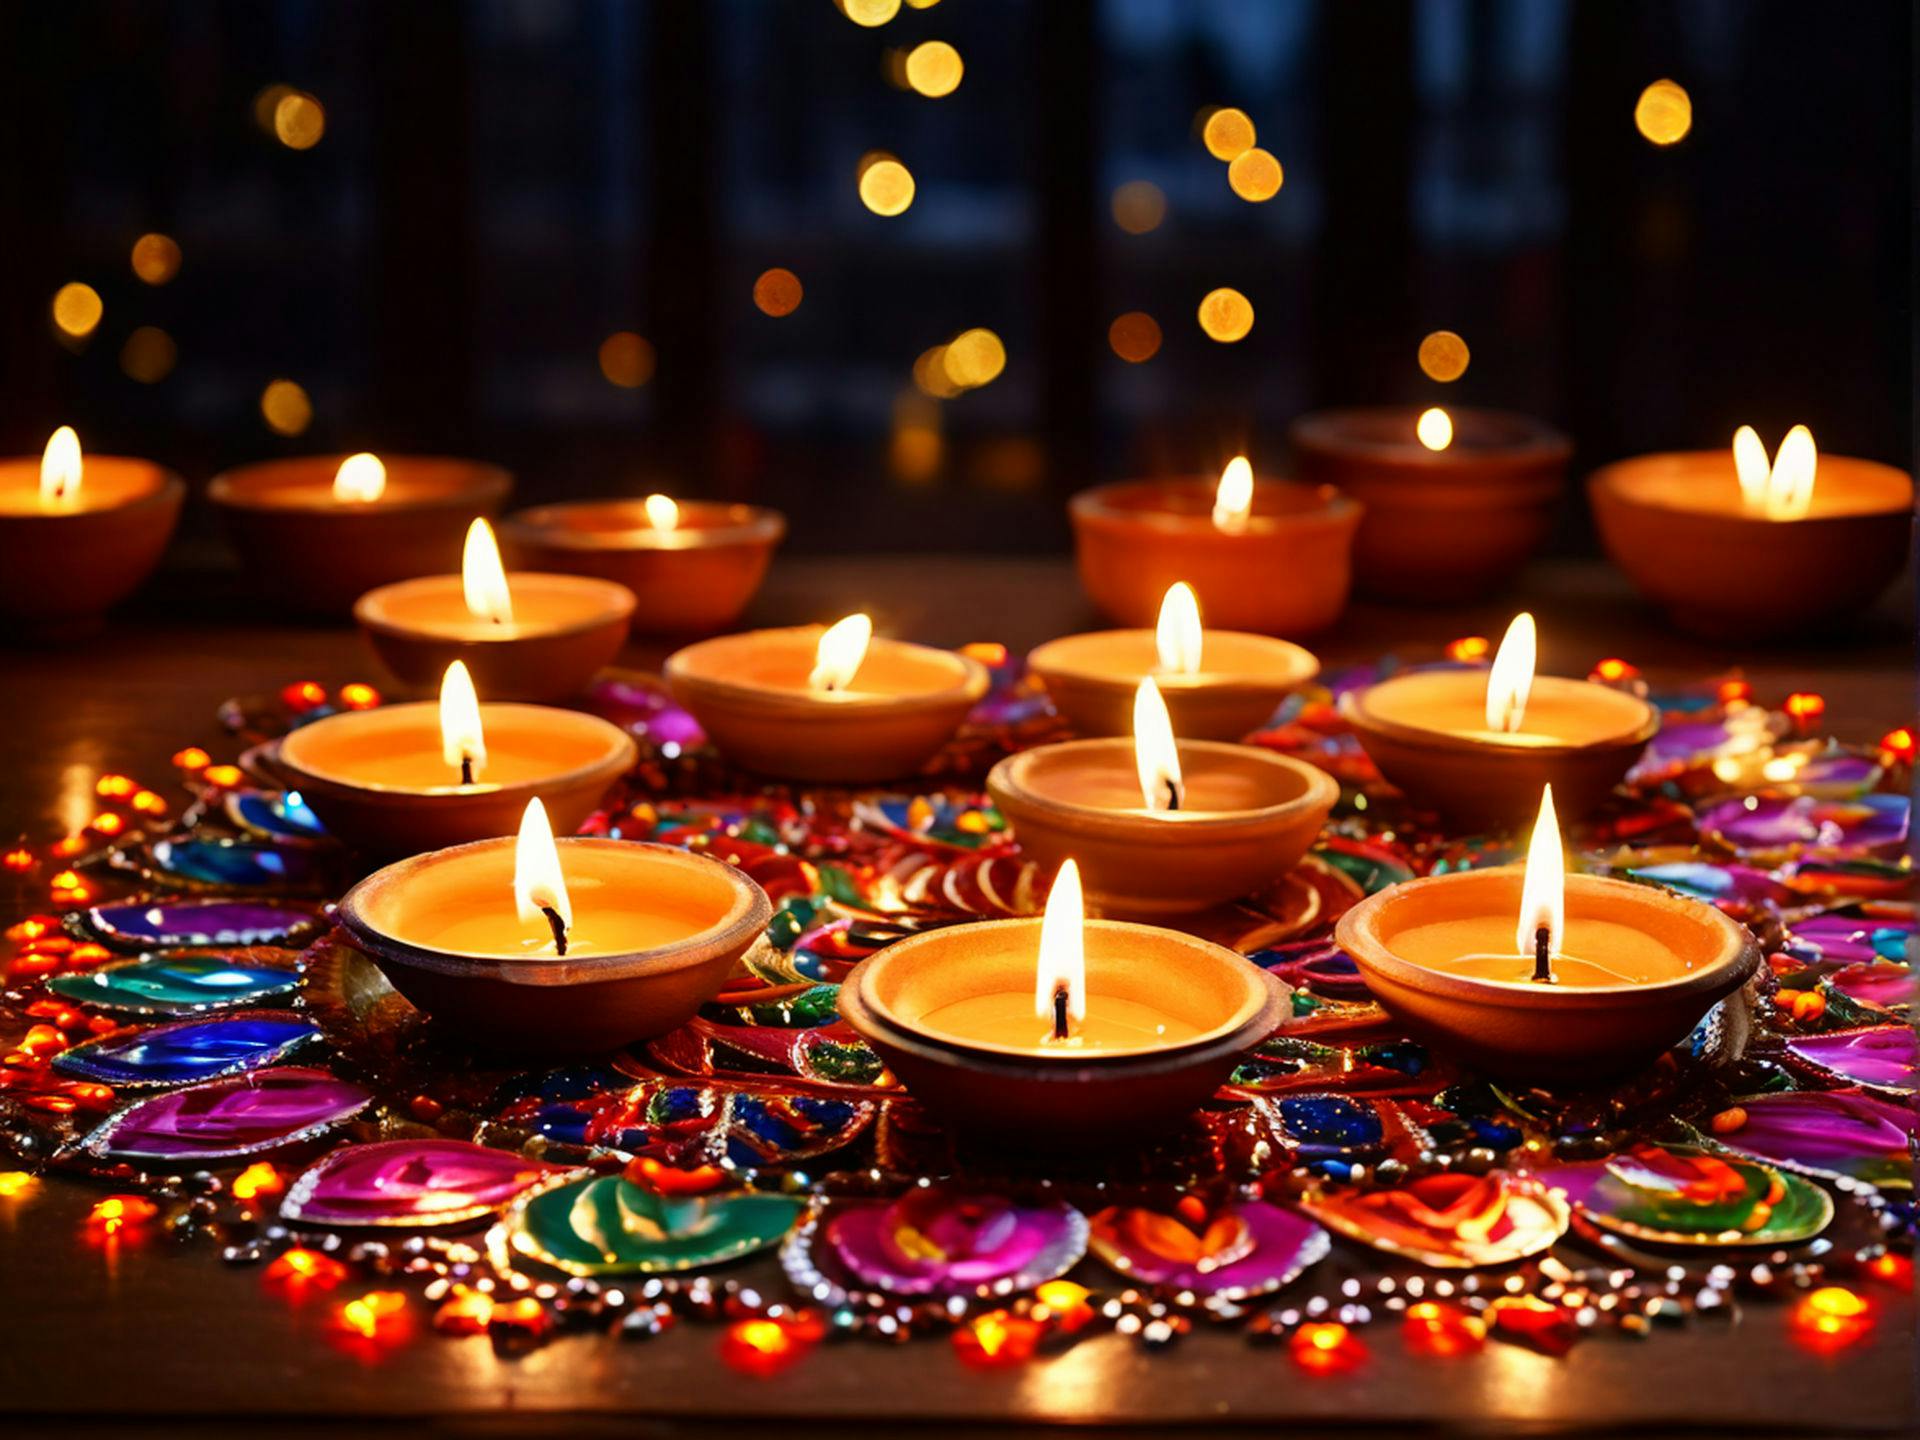 Diwali Festival of Lights with Diyas and Rangoli Patterns